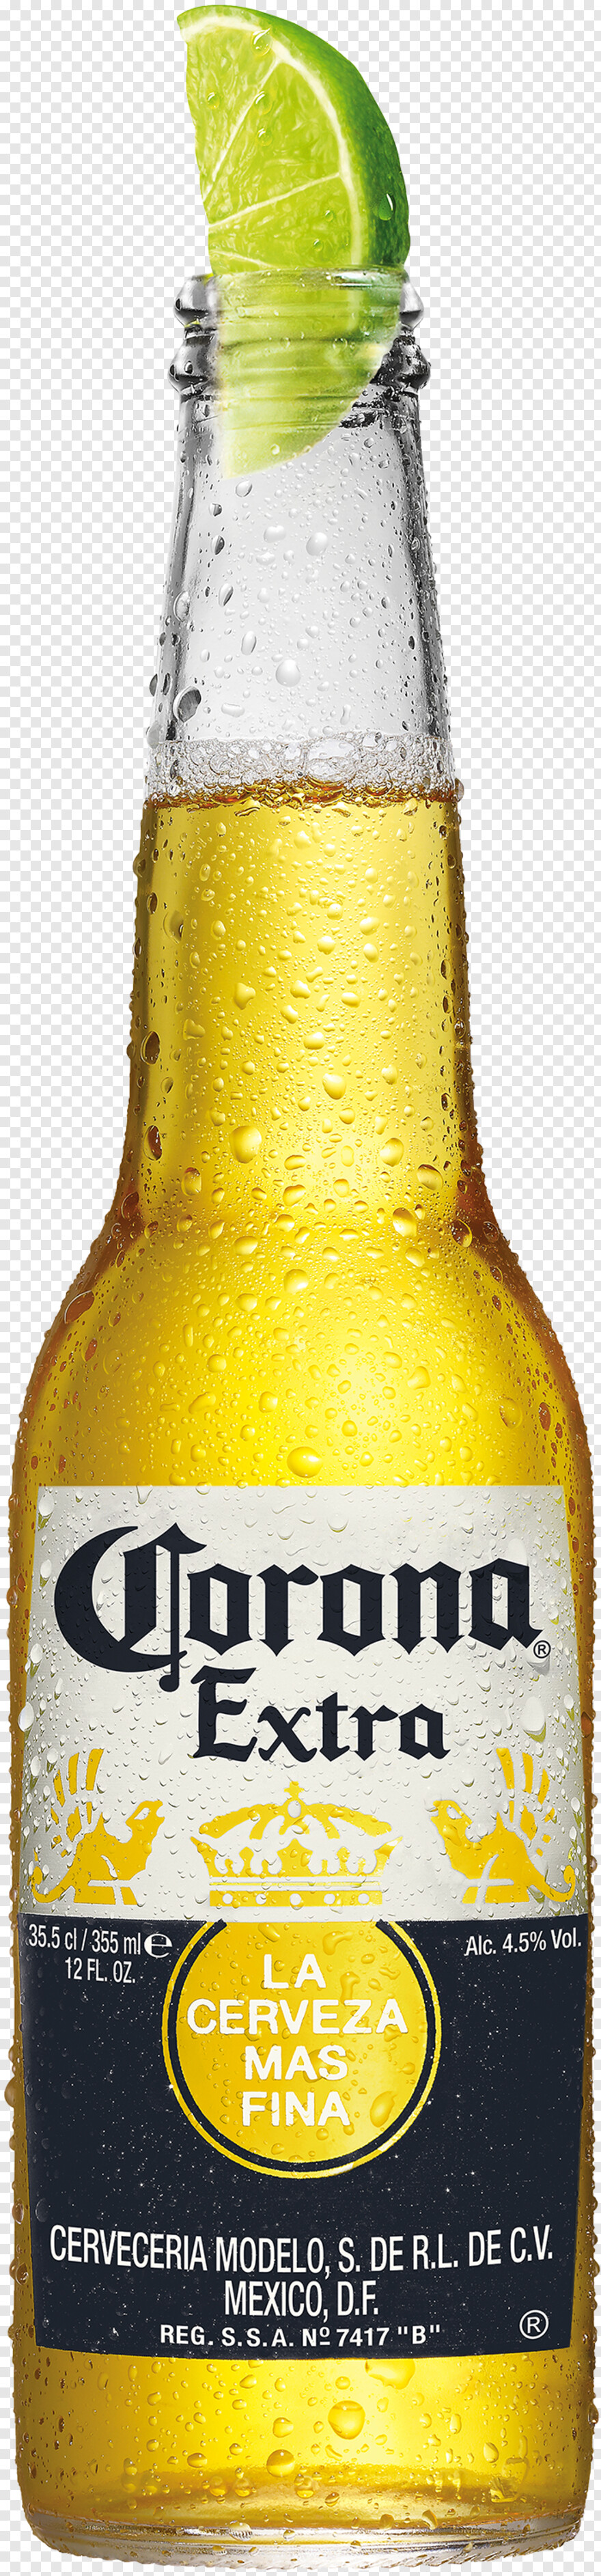 corona-logo # 380607